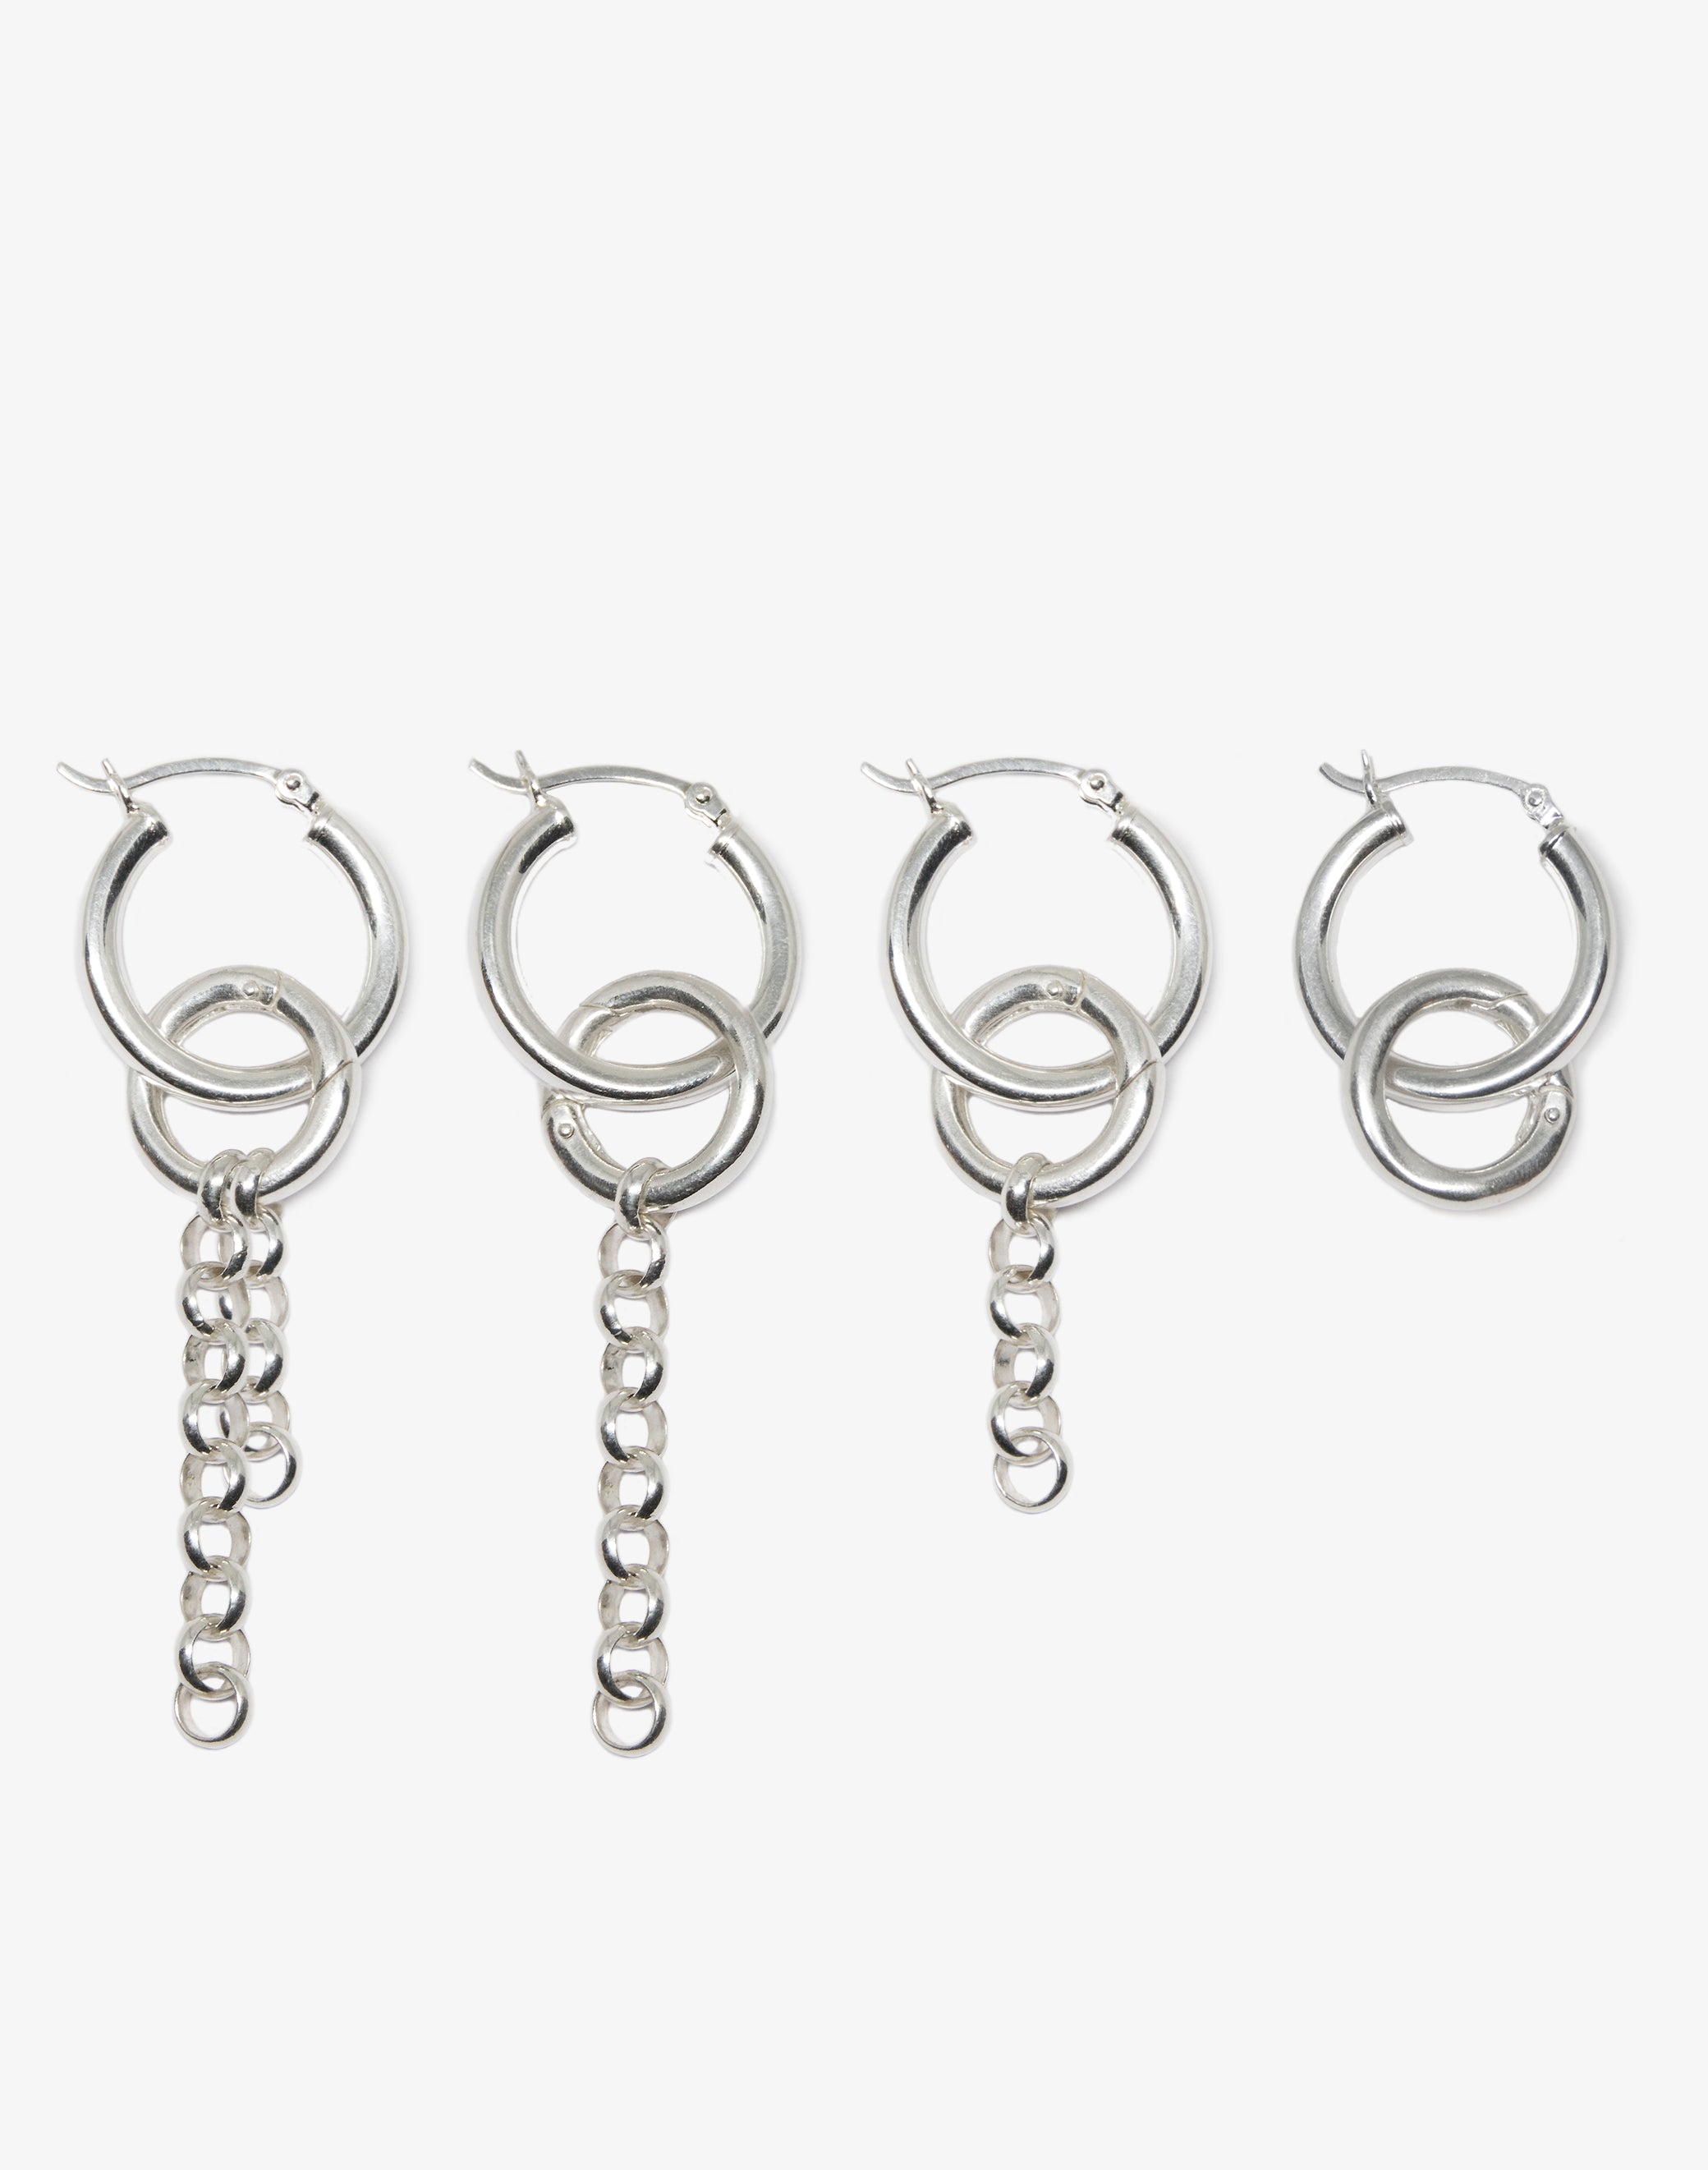 llayers jewelry men silver chain hoops earrings jewelry minimal - Made in Brooklyn New York